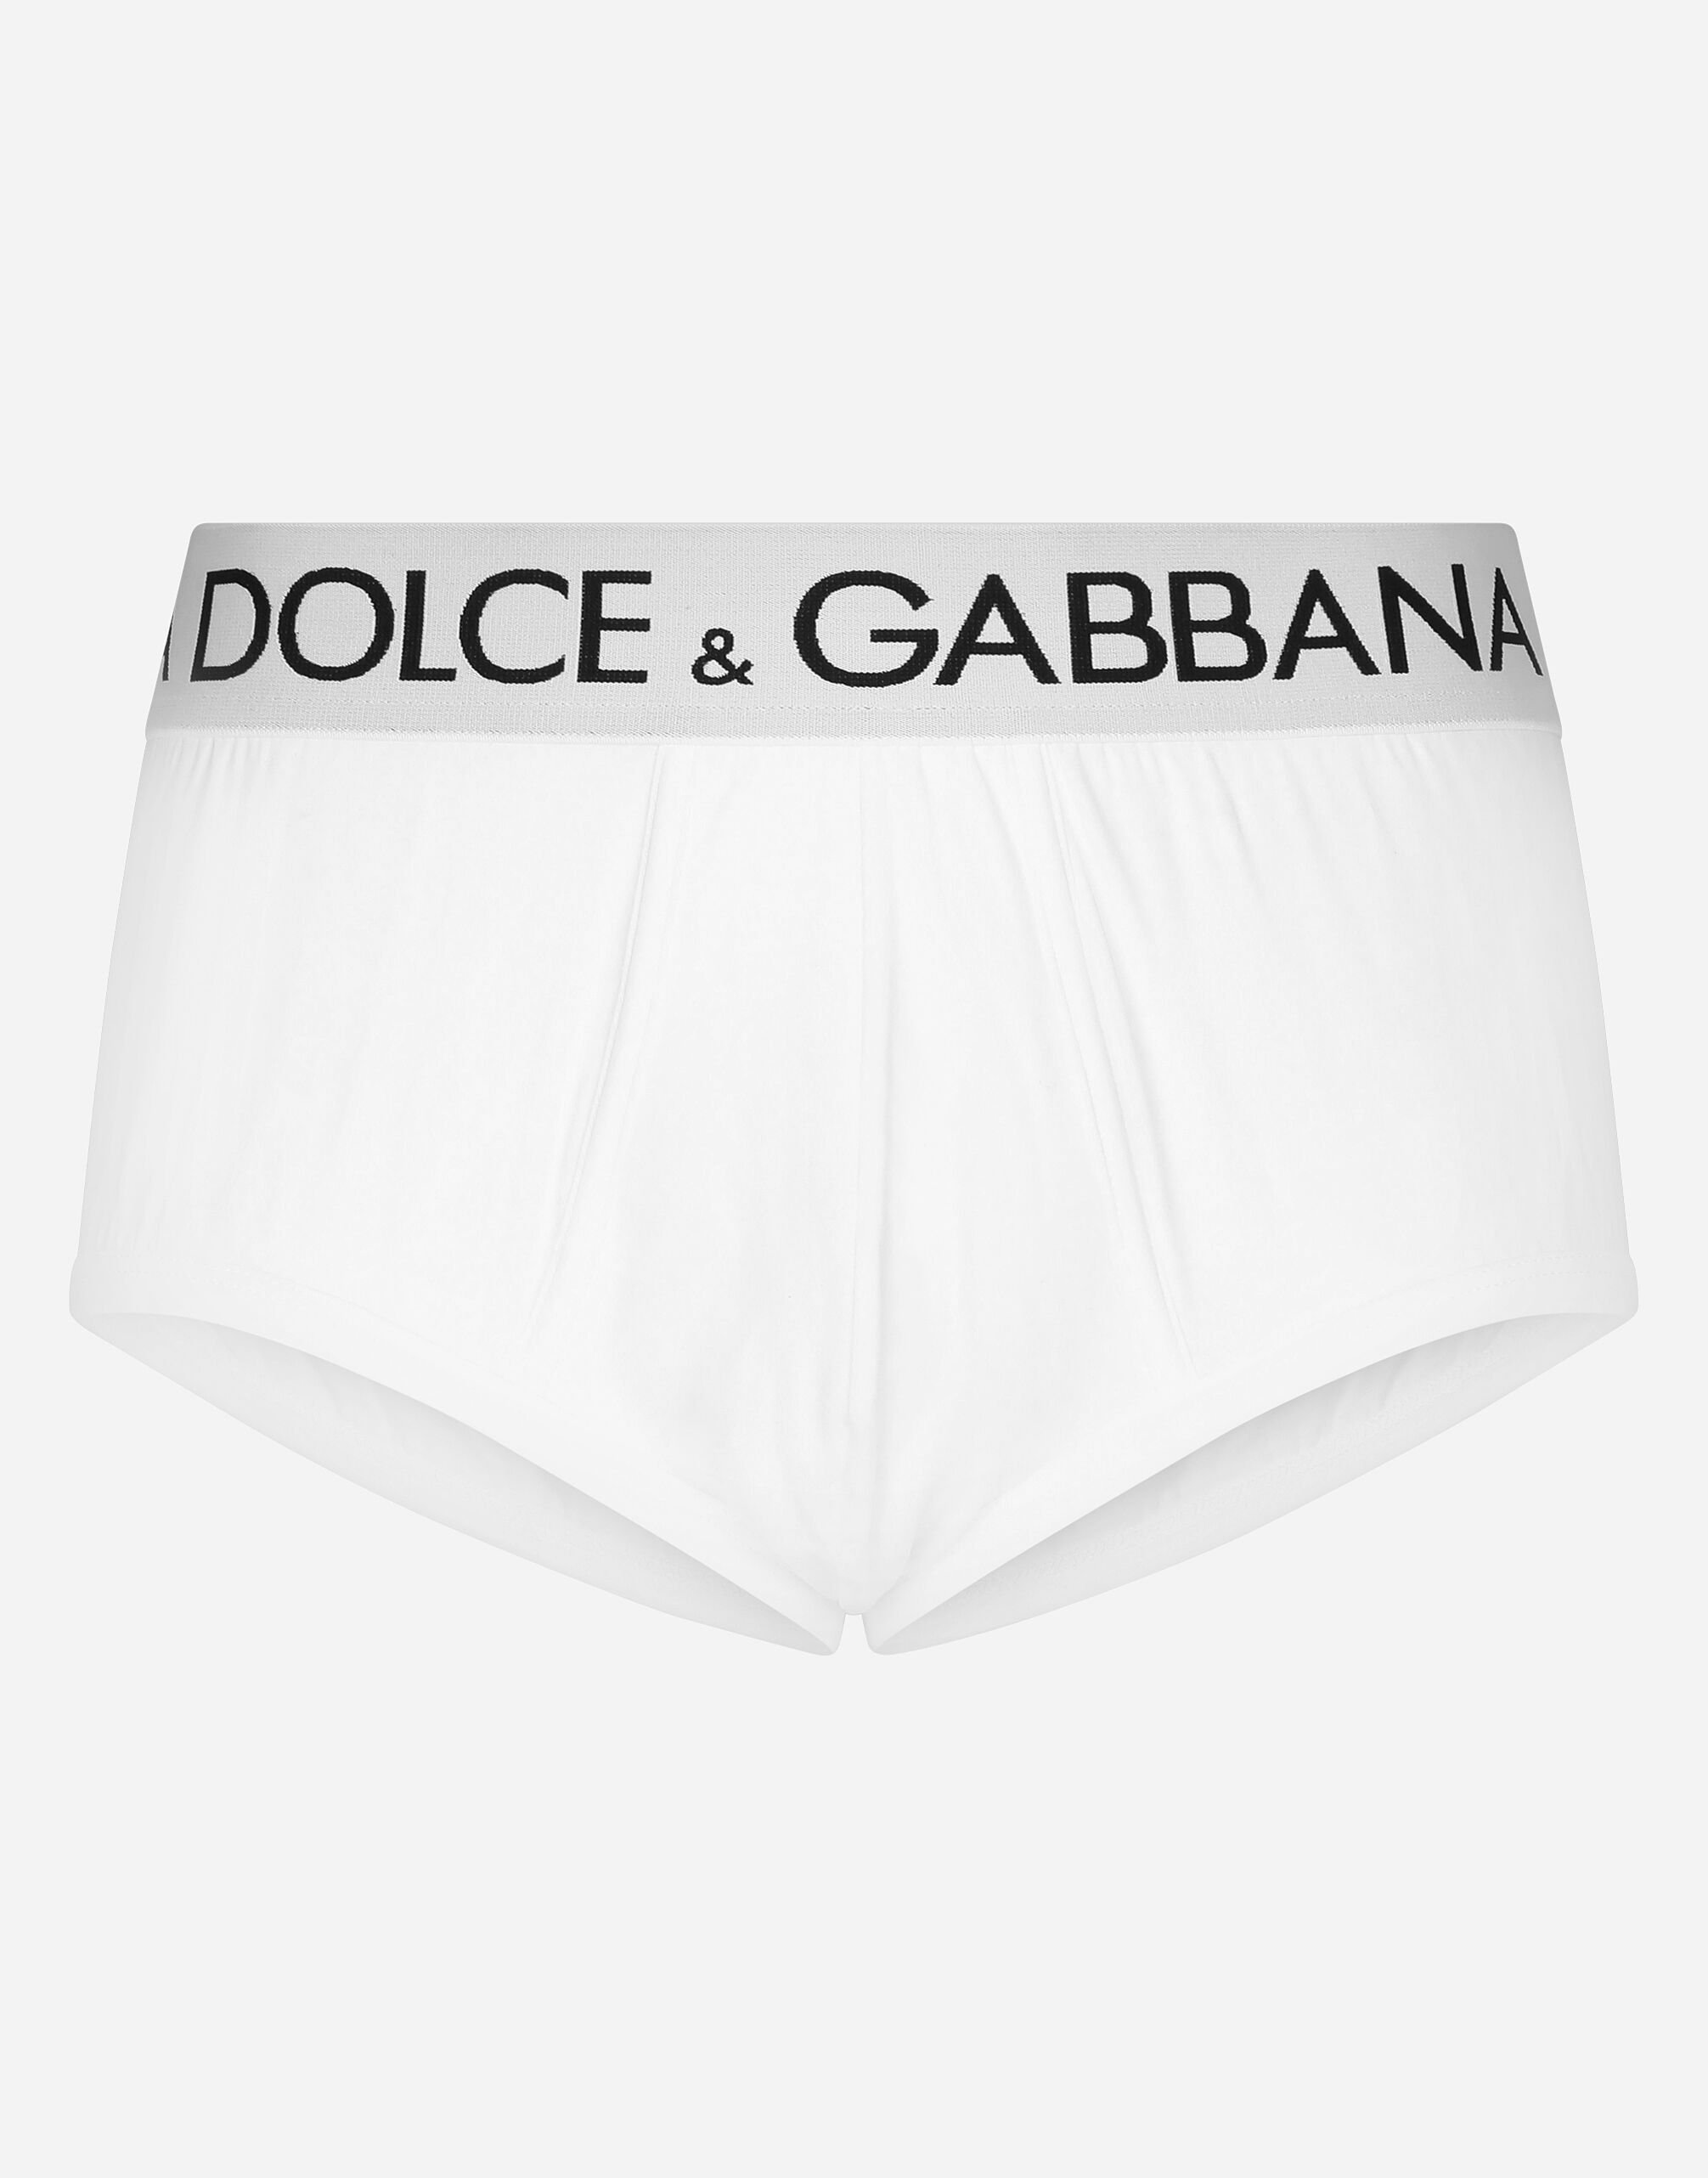 Dolce & Gabbana High-rise two-way stretch jersey Brando briefs Black M3D70JFUEB0